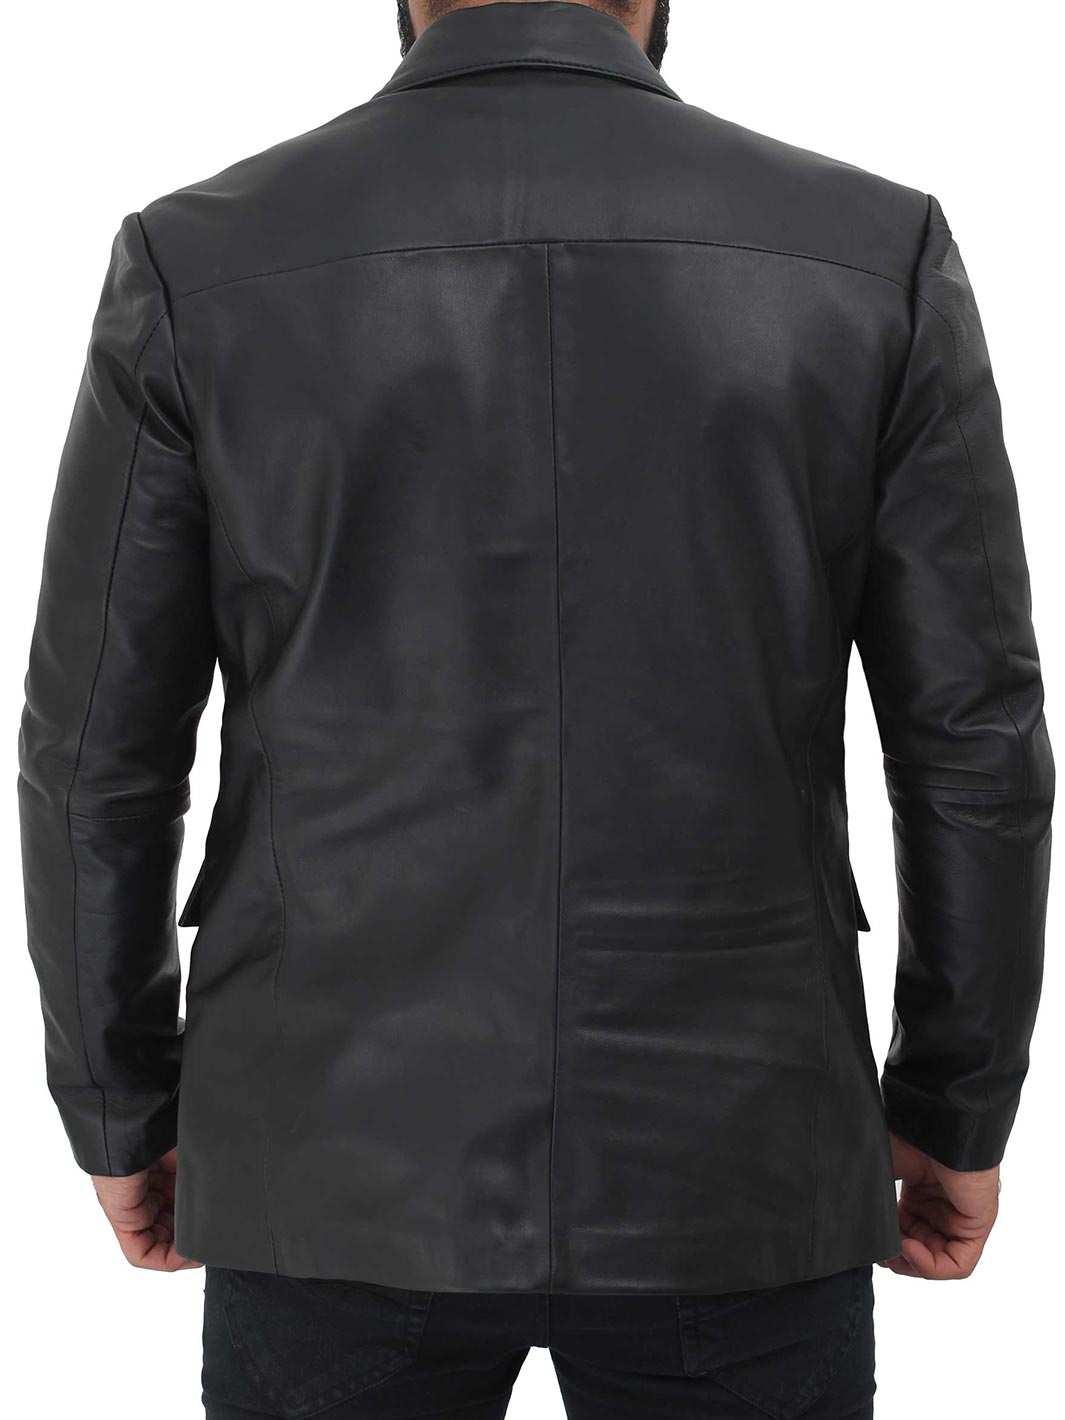 Brandon Men's Black Leather Blazer